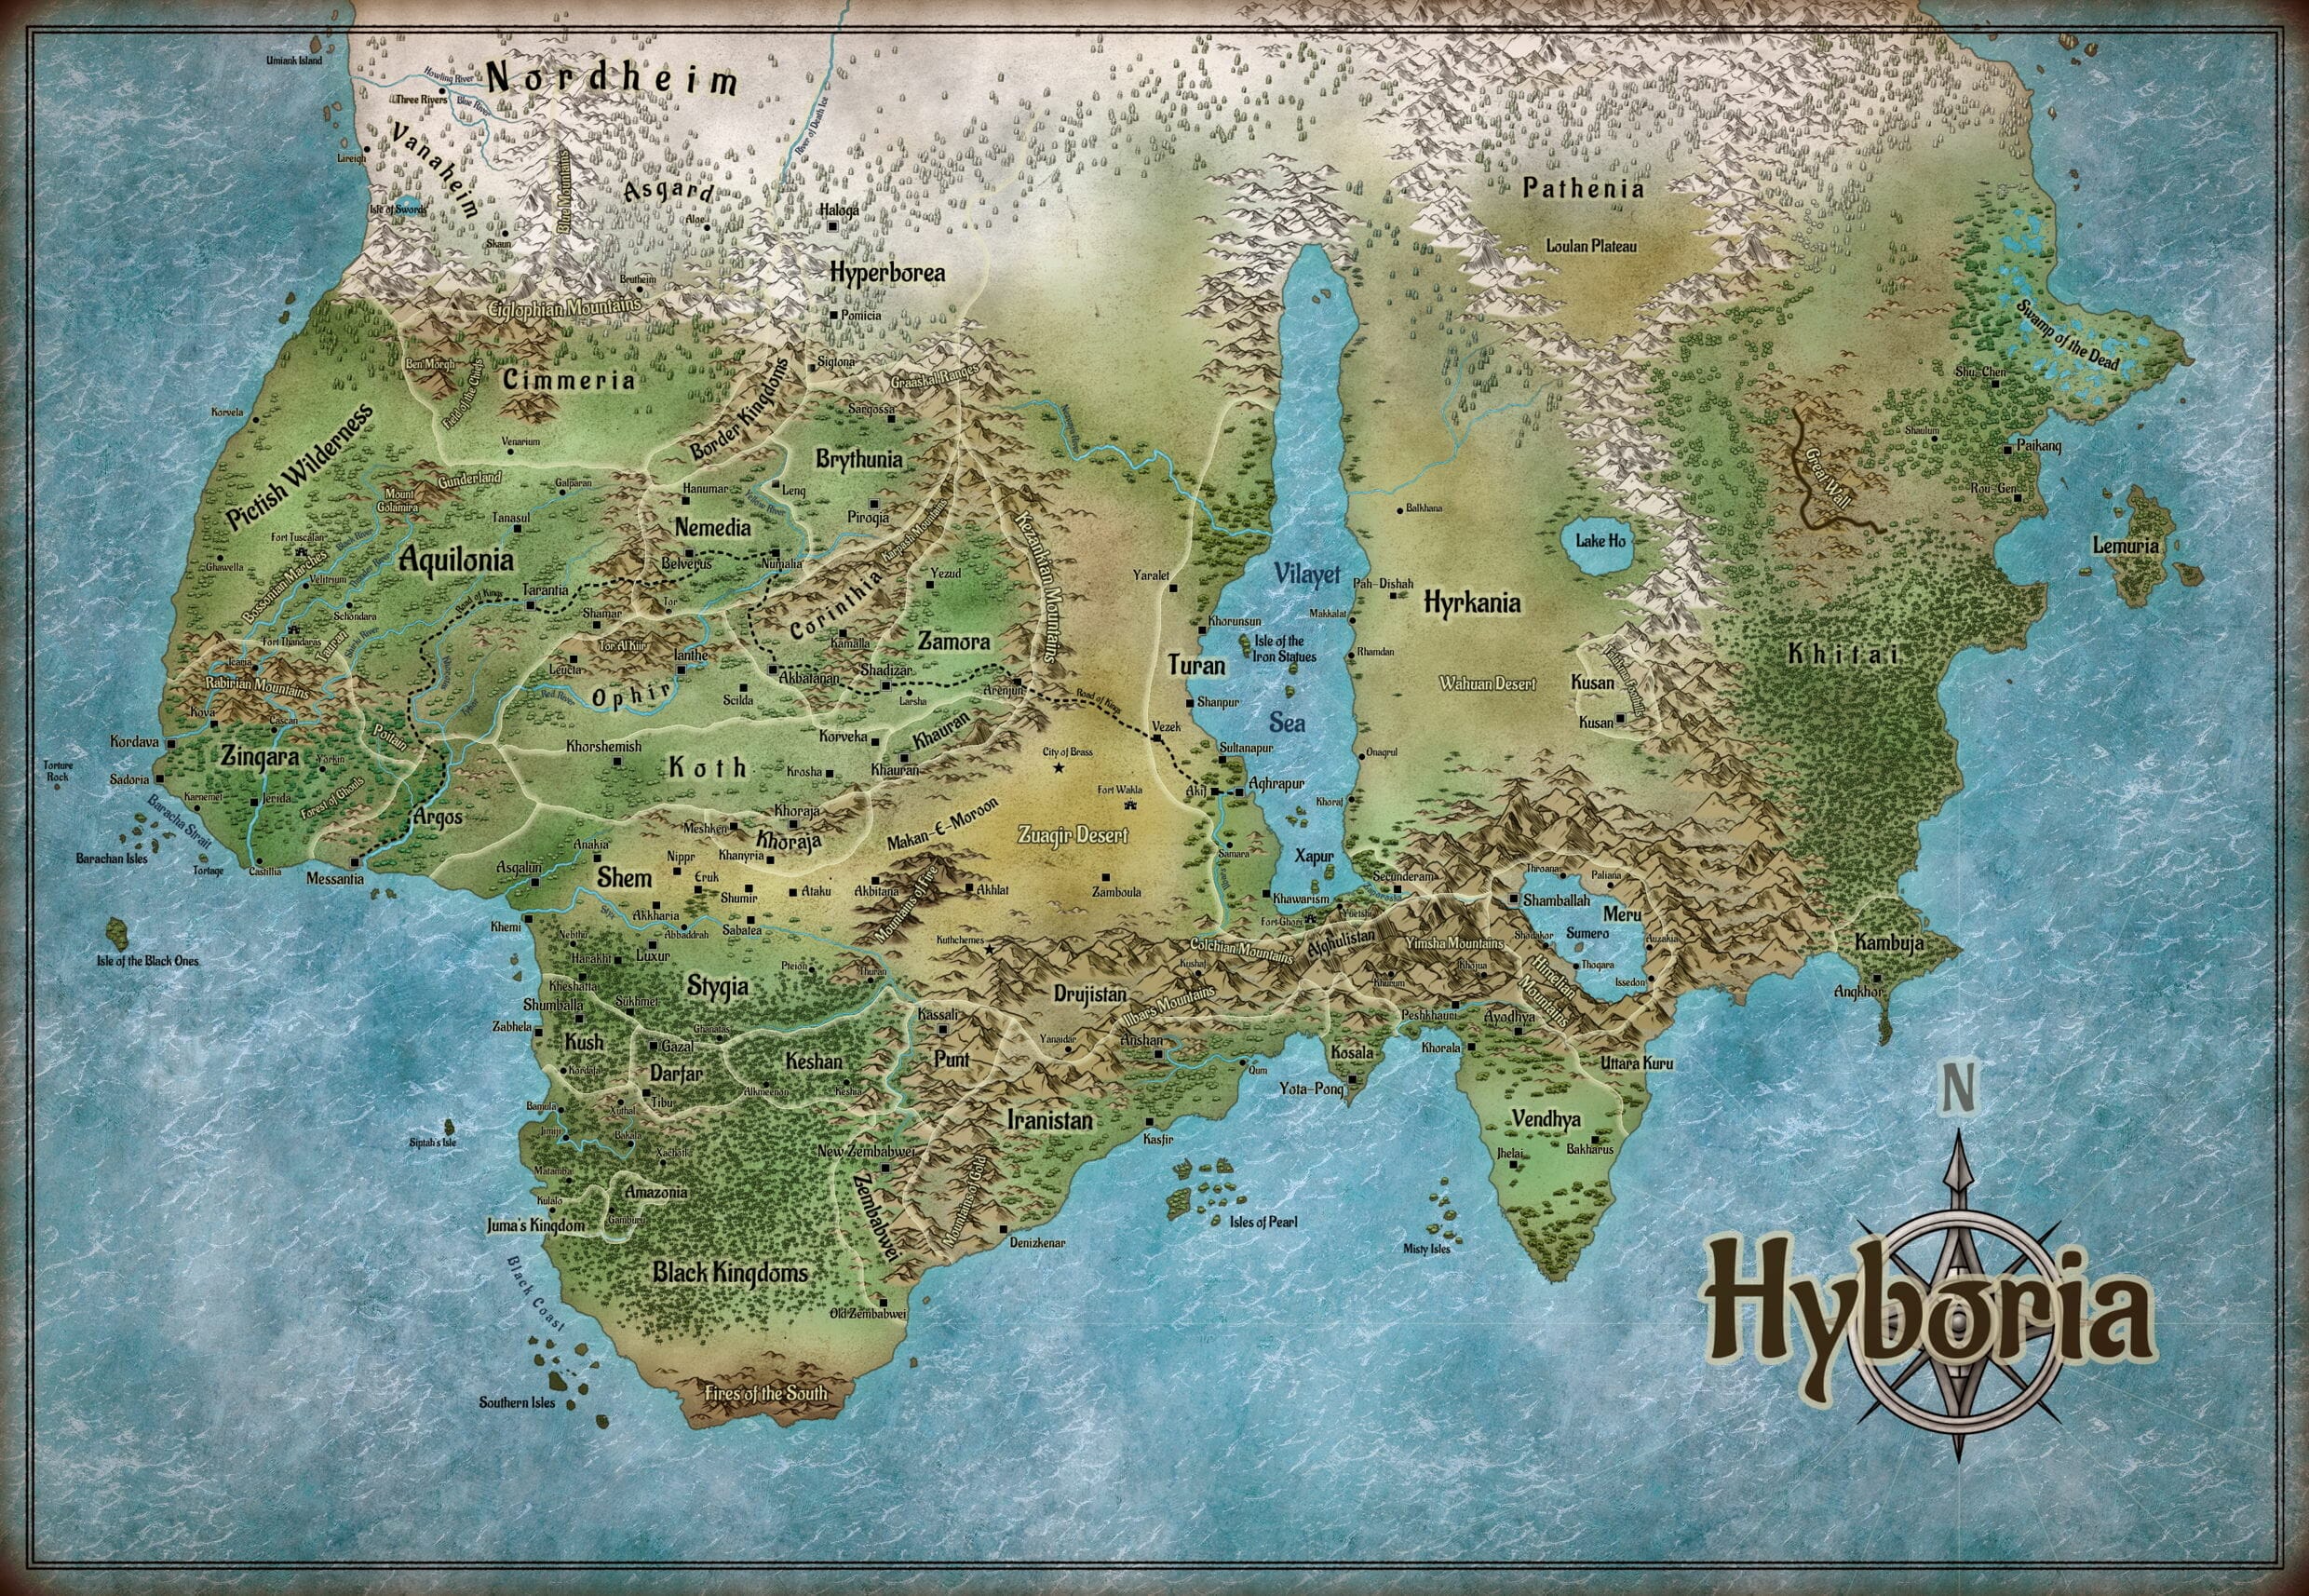 Hyborian Age of Conan the Barbarian map